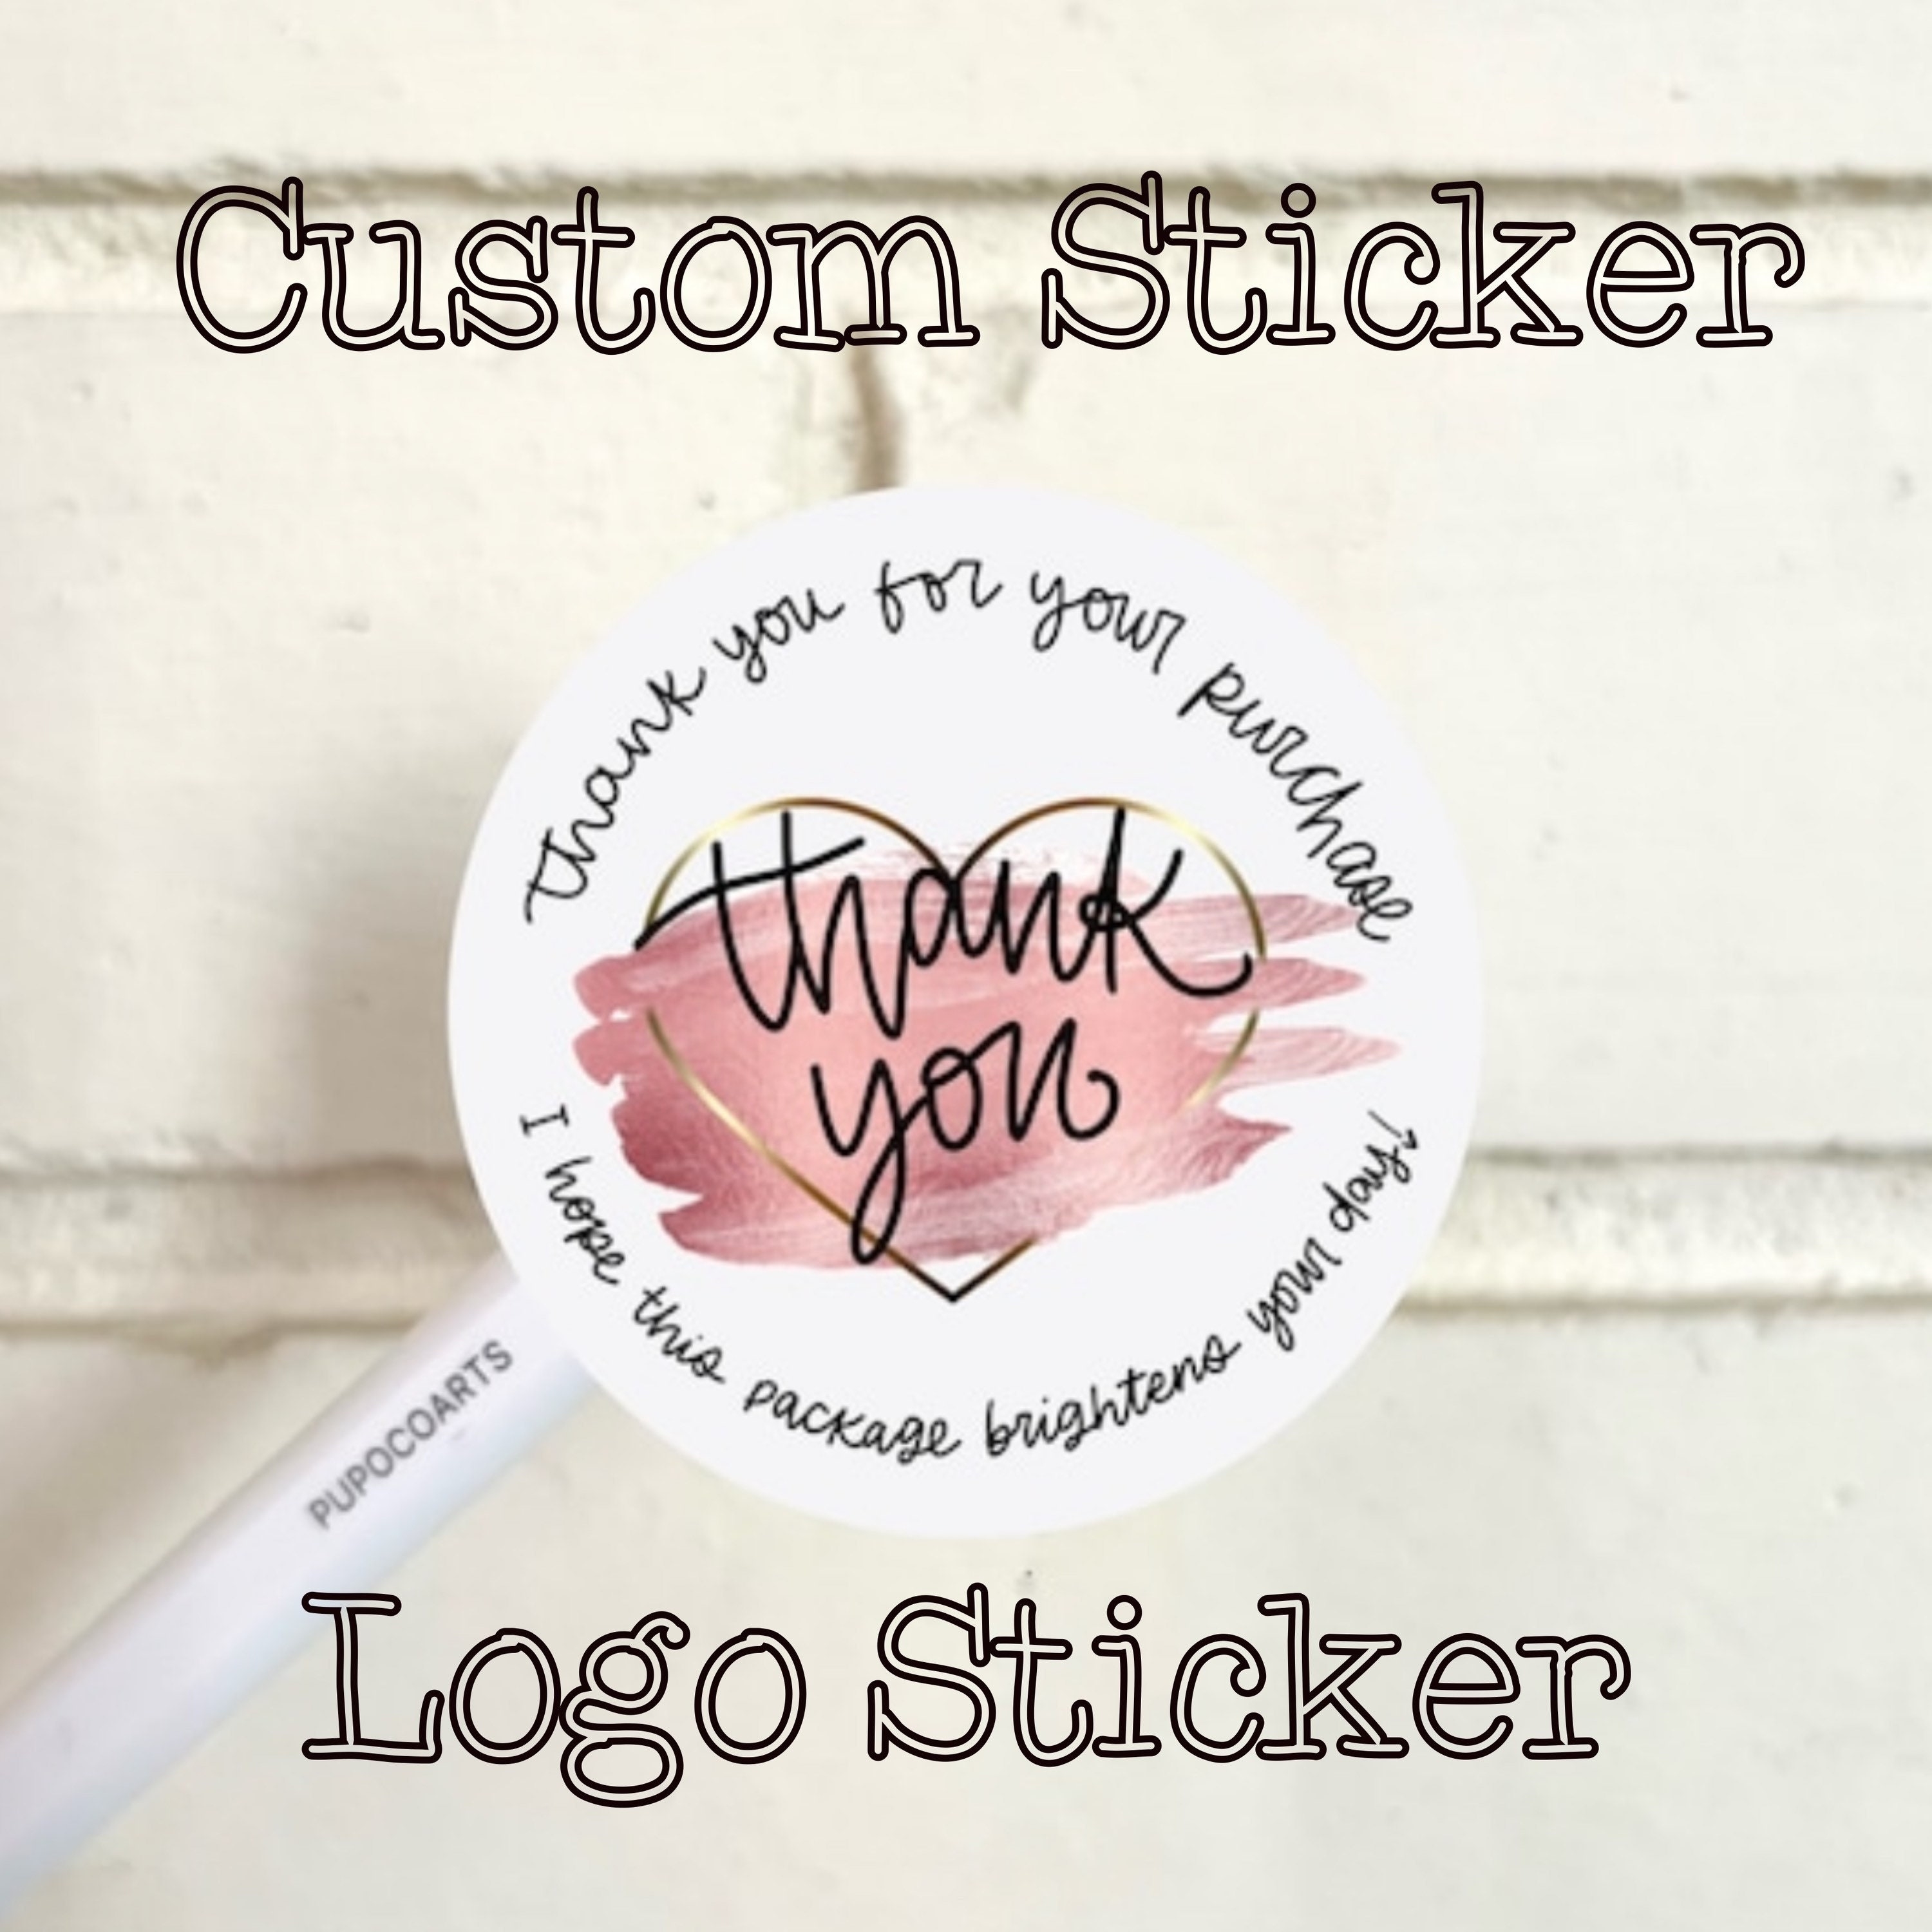 Custom Business Logo Window Decals Wall Decor Stickers